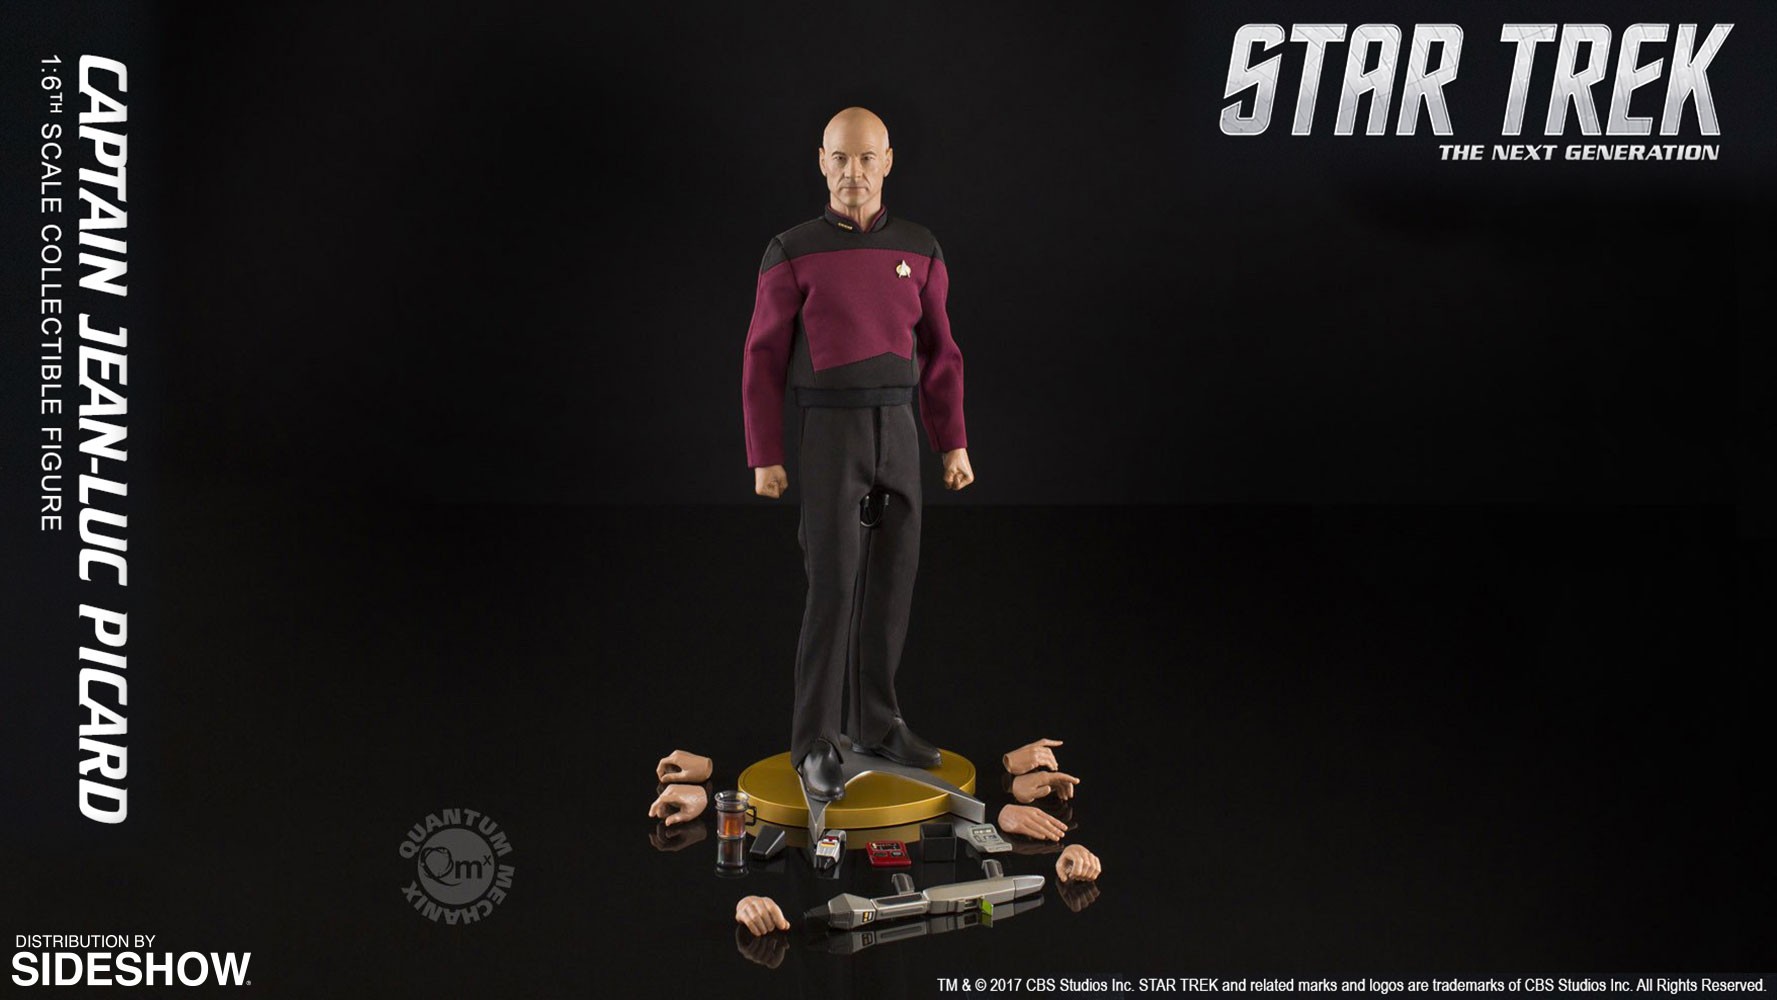 Captain Jean-Luc Picard Exclusive Edition - Prototype Shown